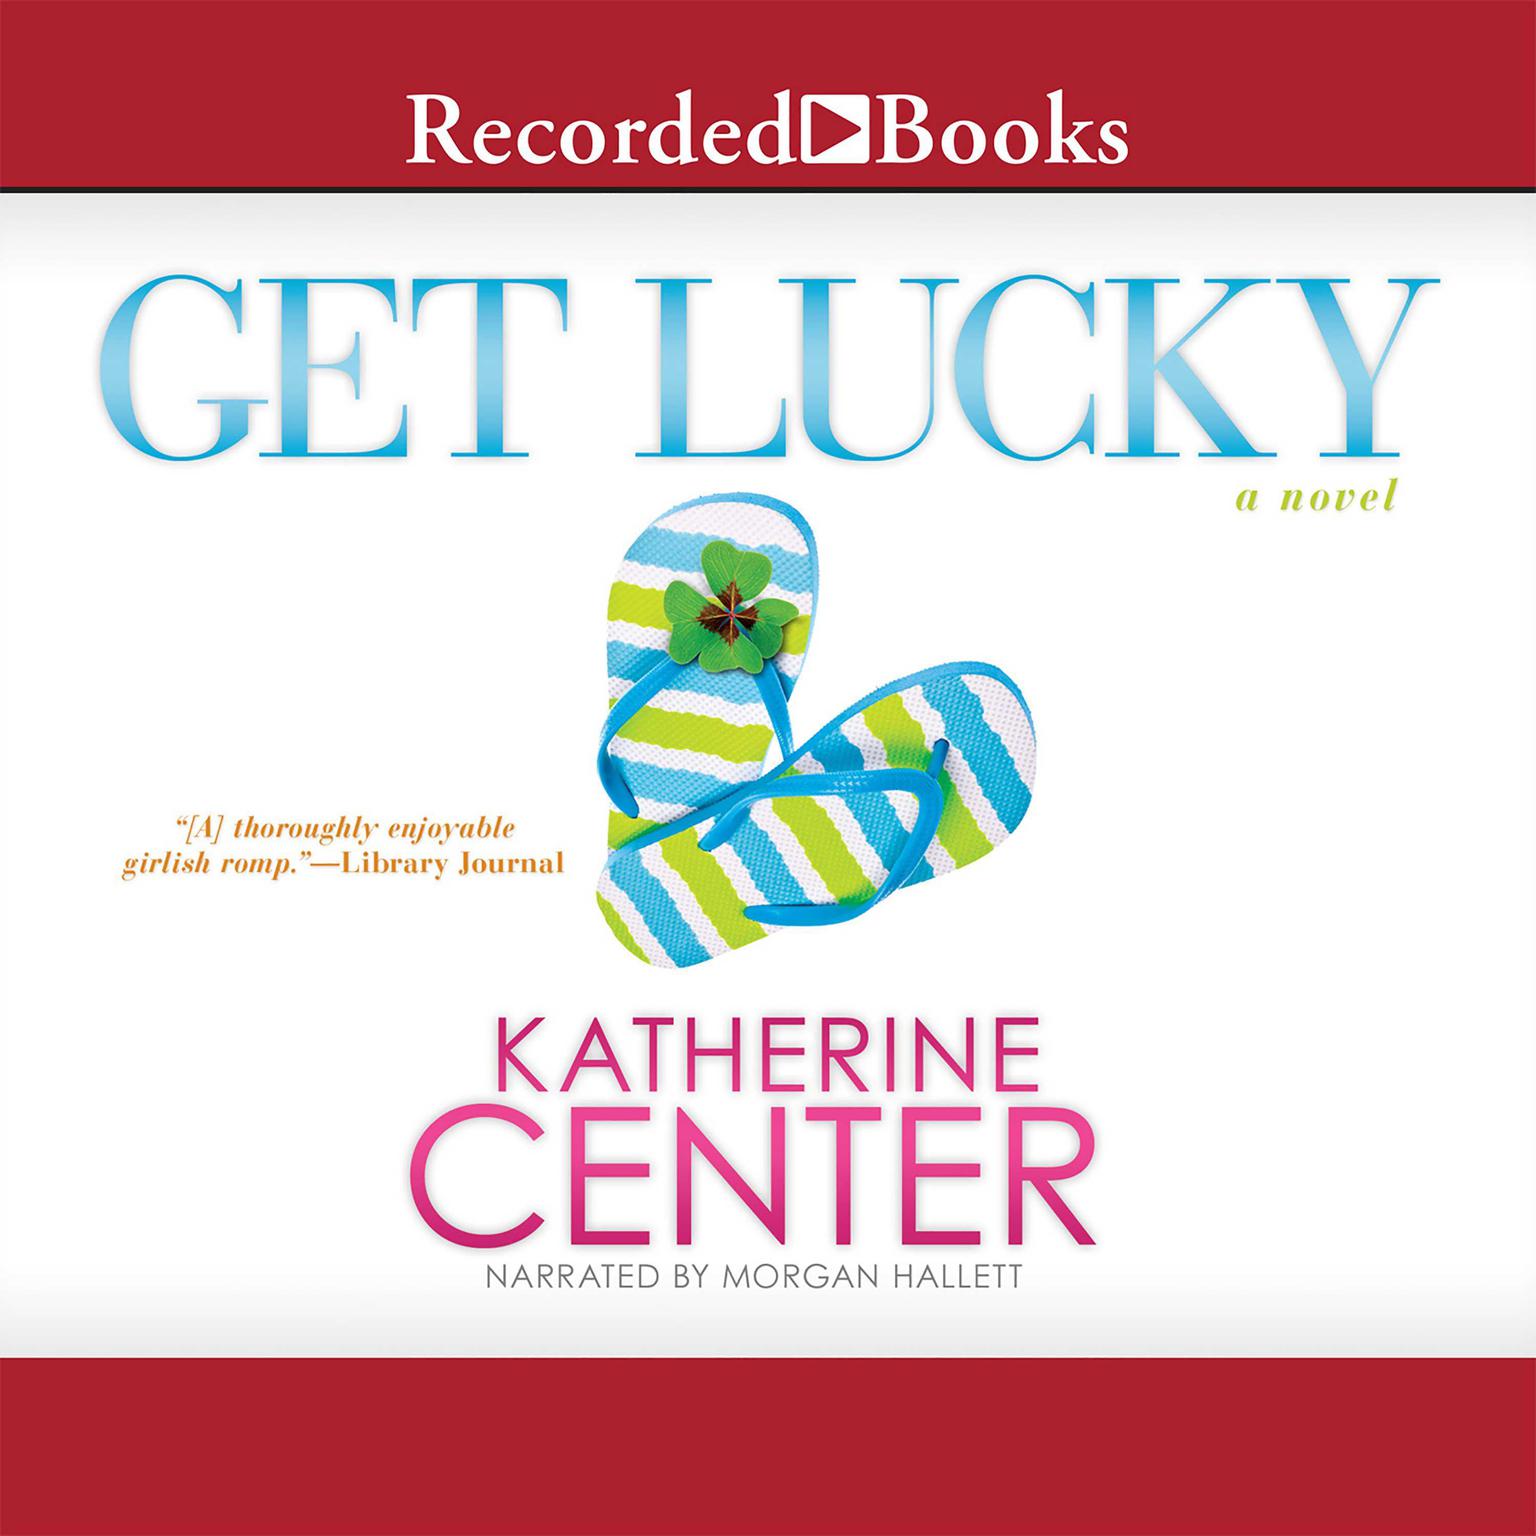 Get Lucky: A Novel Audiobook, by Katherine Center